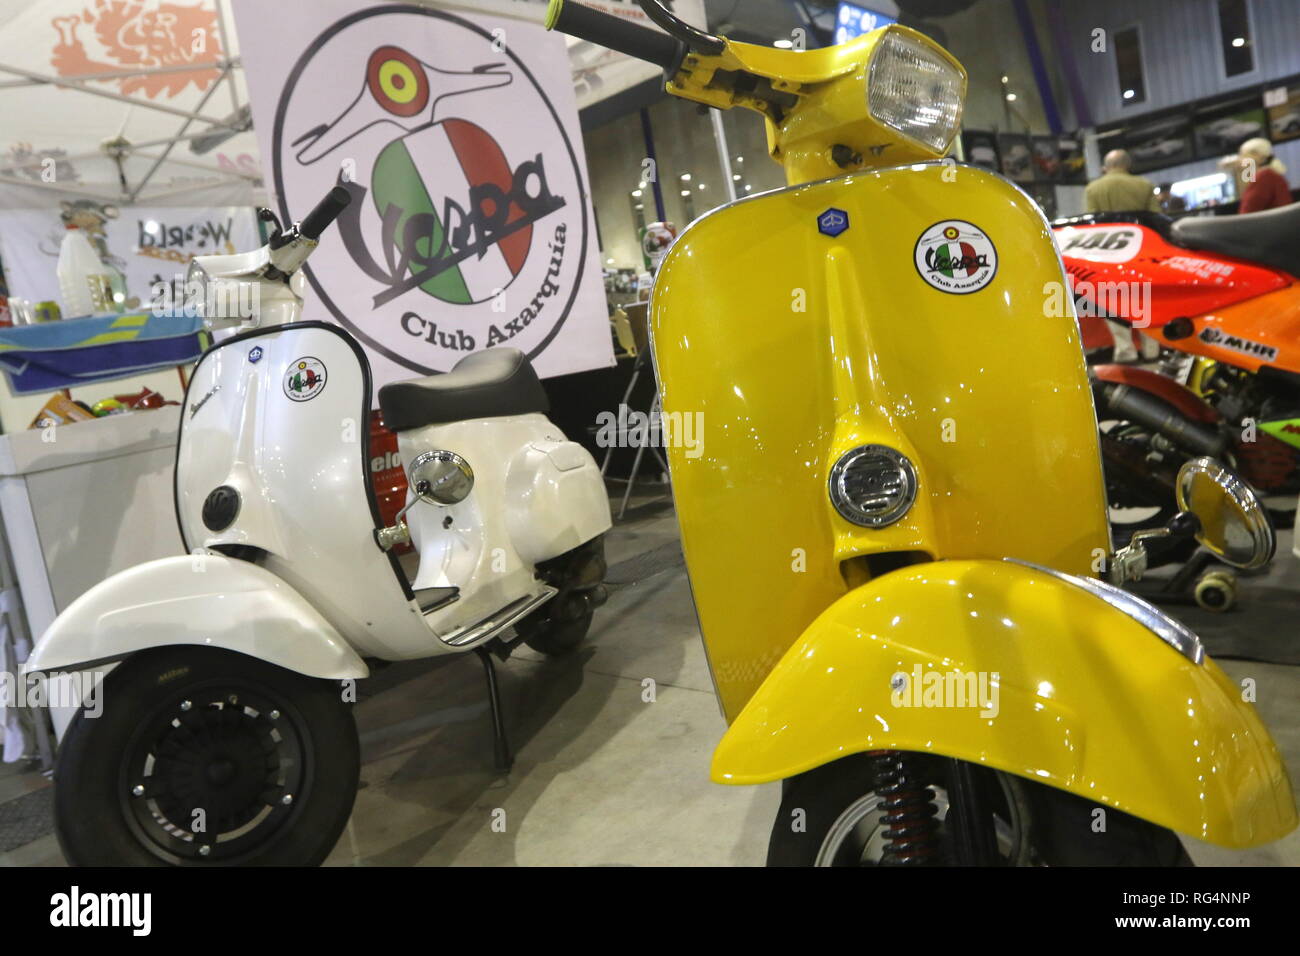 January 27, 2019 - 27 january 2019 (Malaga) The Retro Auto & Moto Malaga  exhibition, the Vintage Vehicle Show, was held on January 25, 26 and 27,  2019 at the Trade Fair